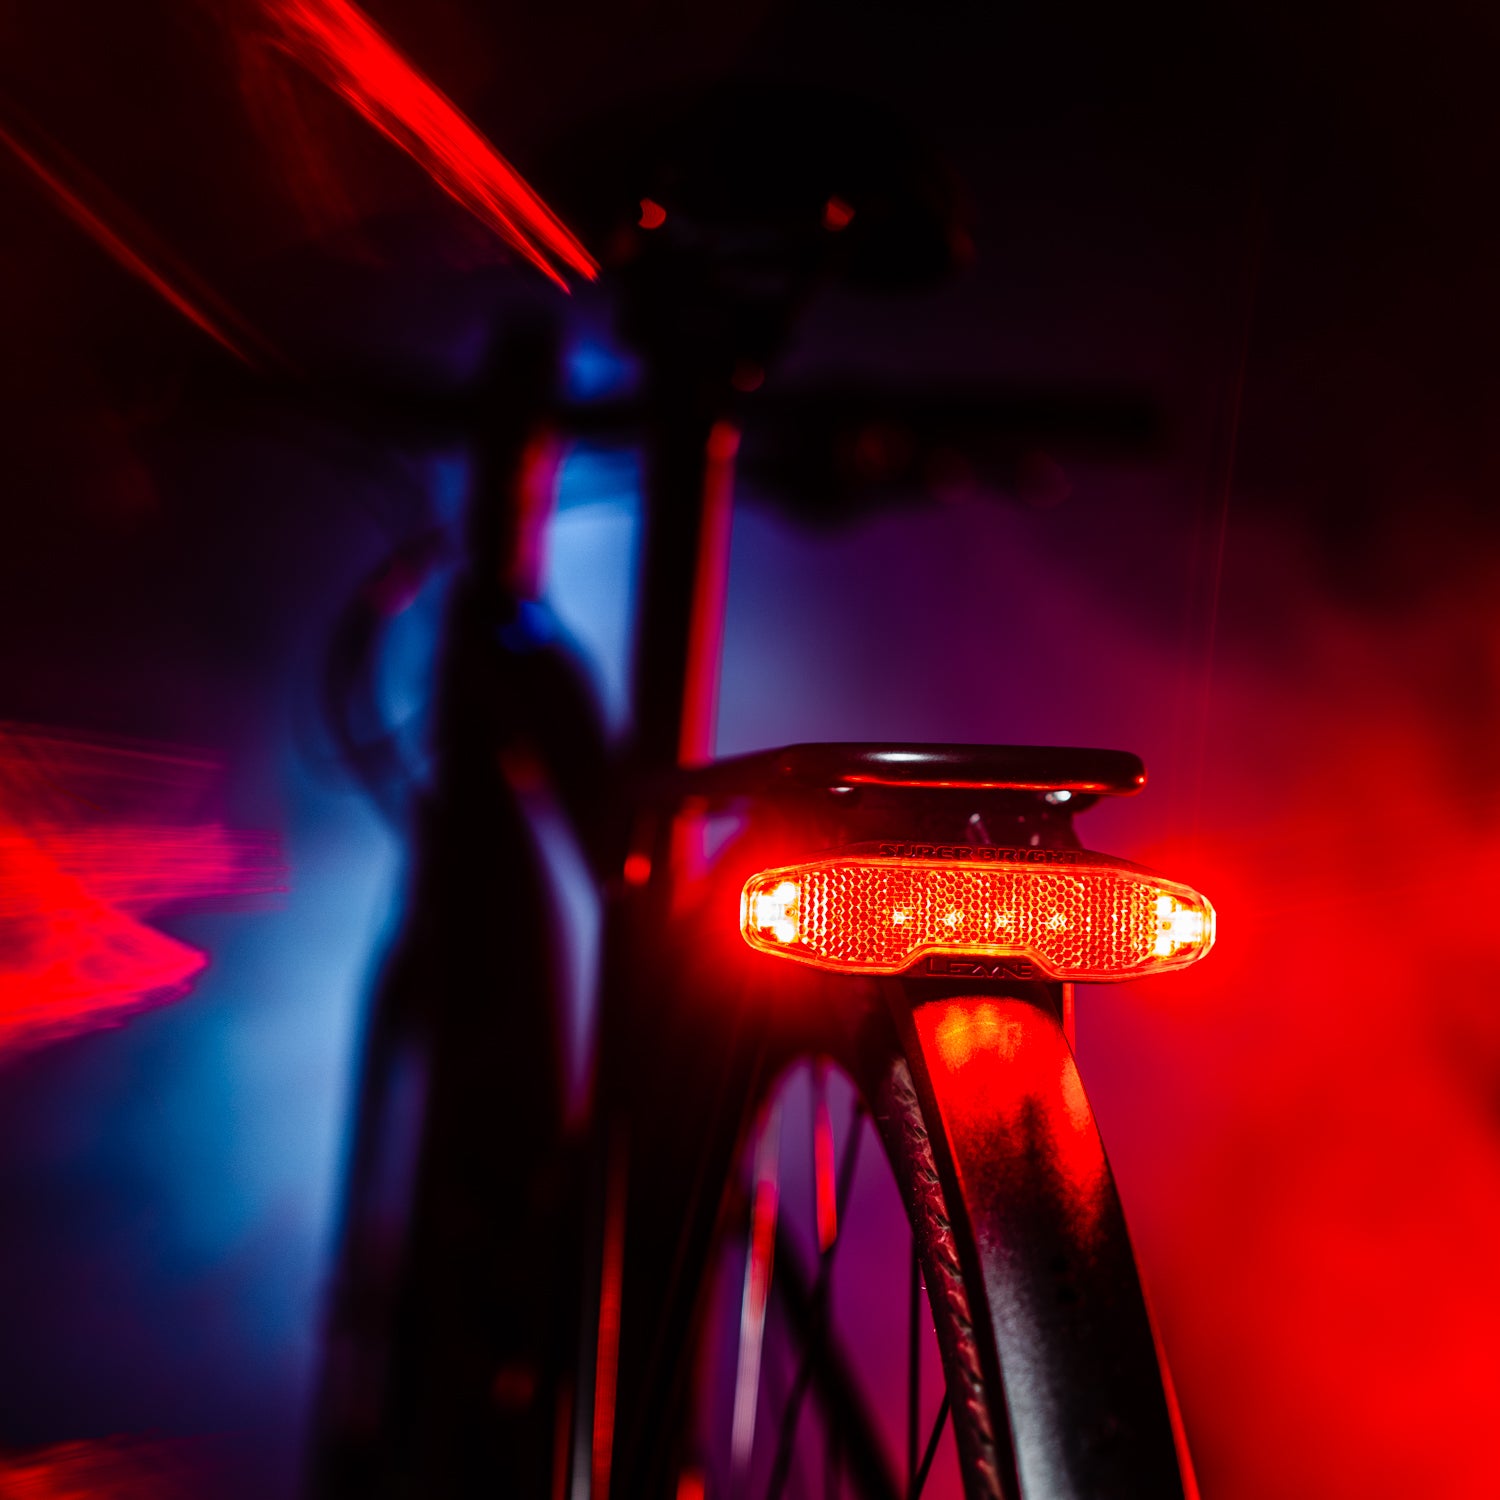 NEW CUSTOM 12 Volt BRIGHT LED Headlight For Motorized Bicycle